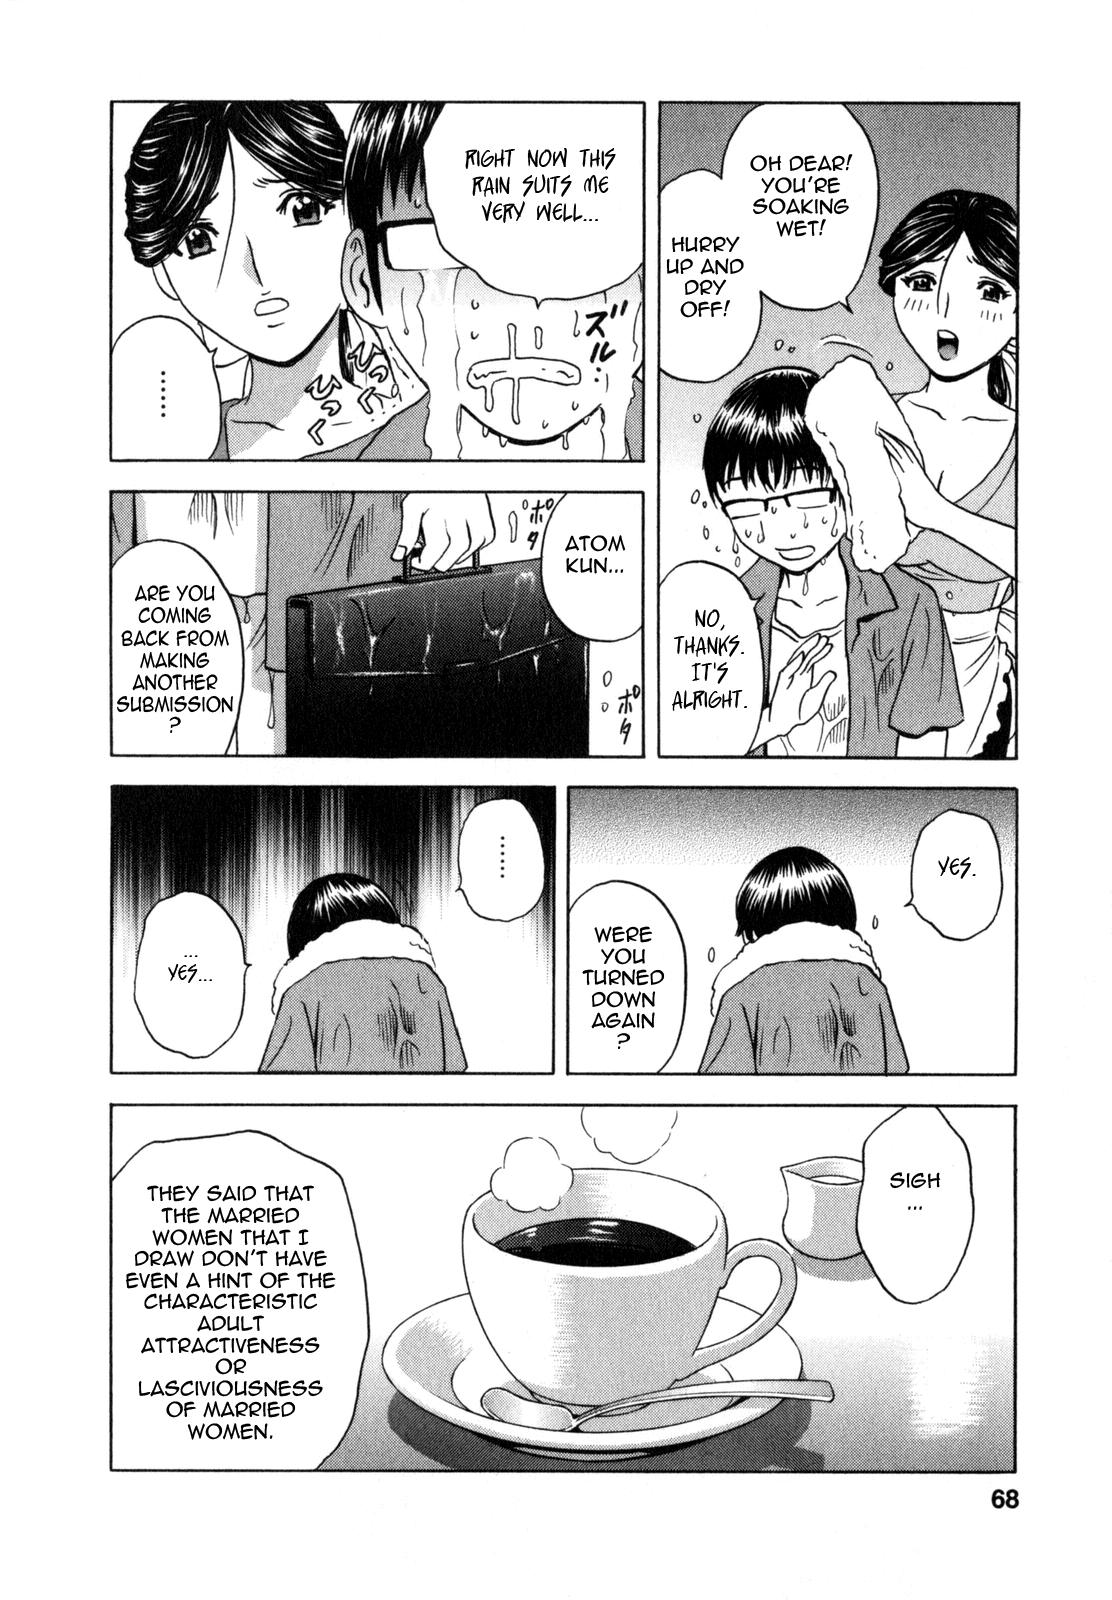 Life with Married Women Just Like a Manga 1 68